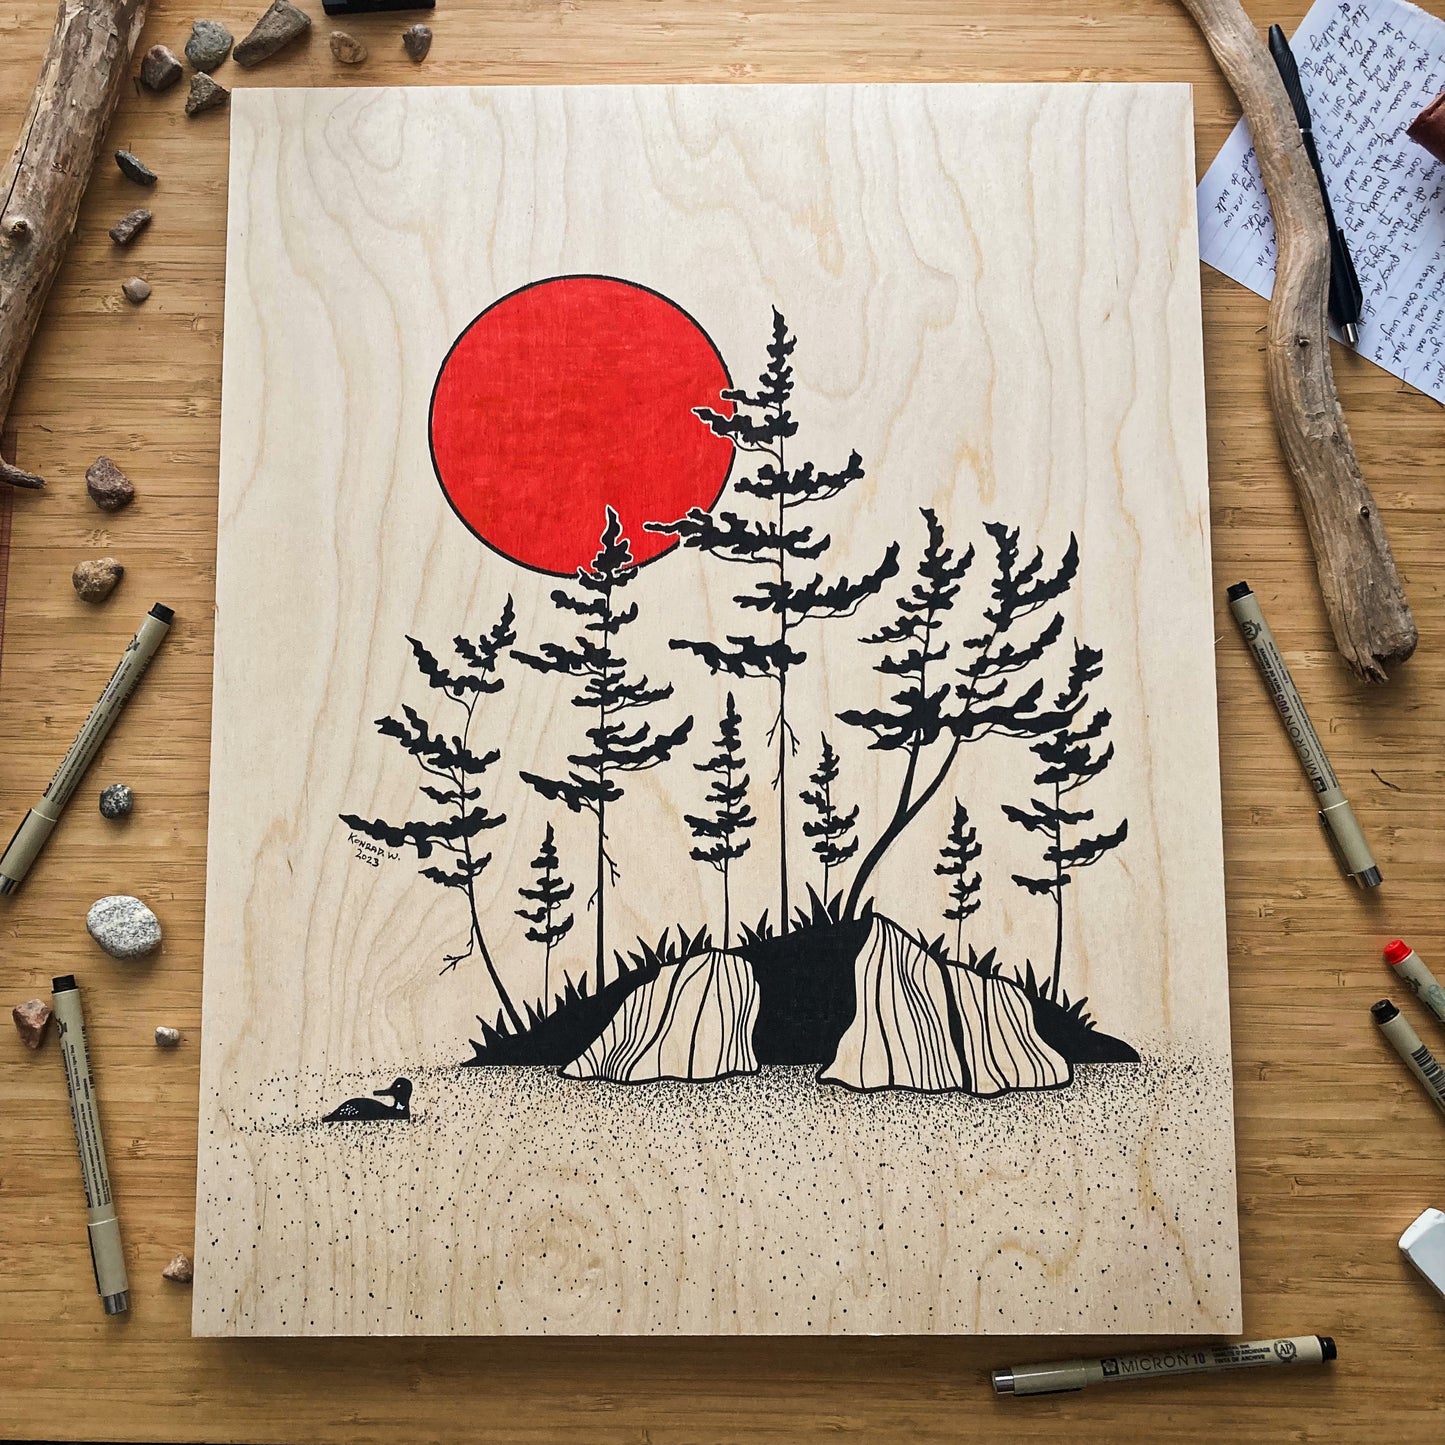 Red Sun Island - ORIGINAL 16x20 Wood Panel Illustration